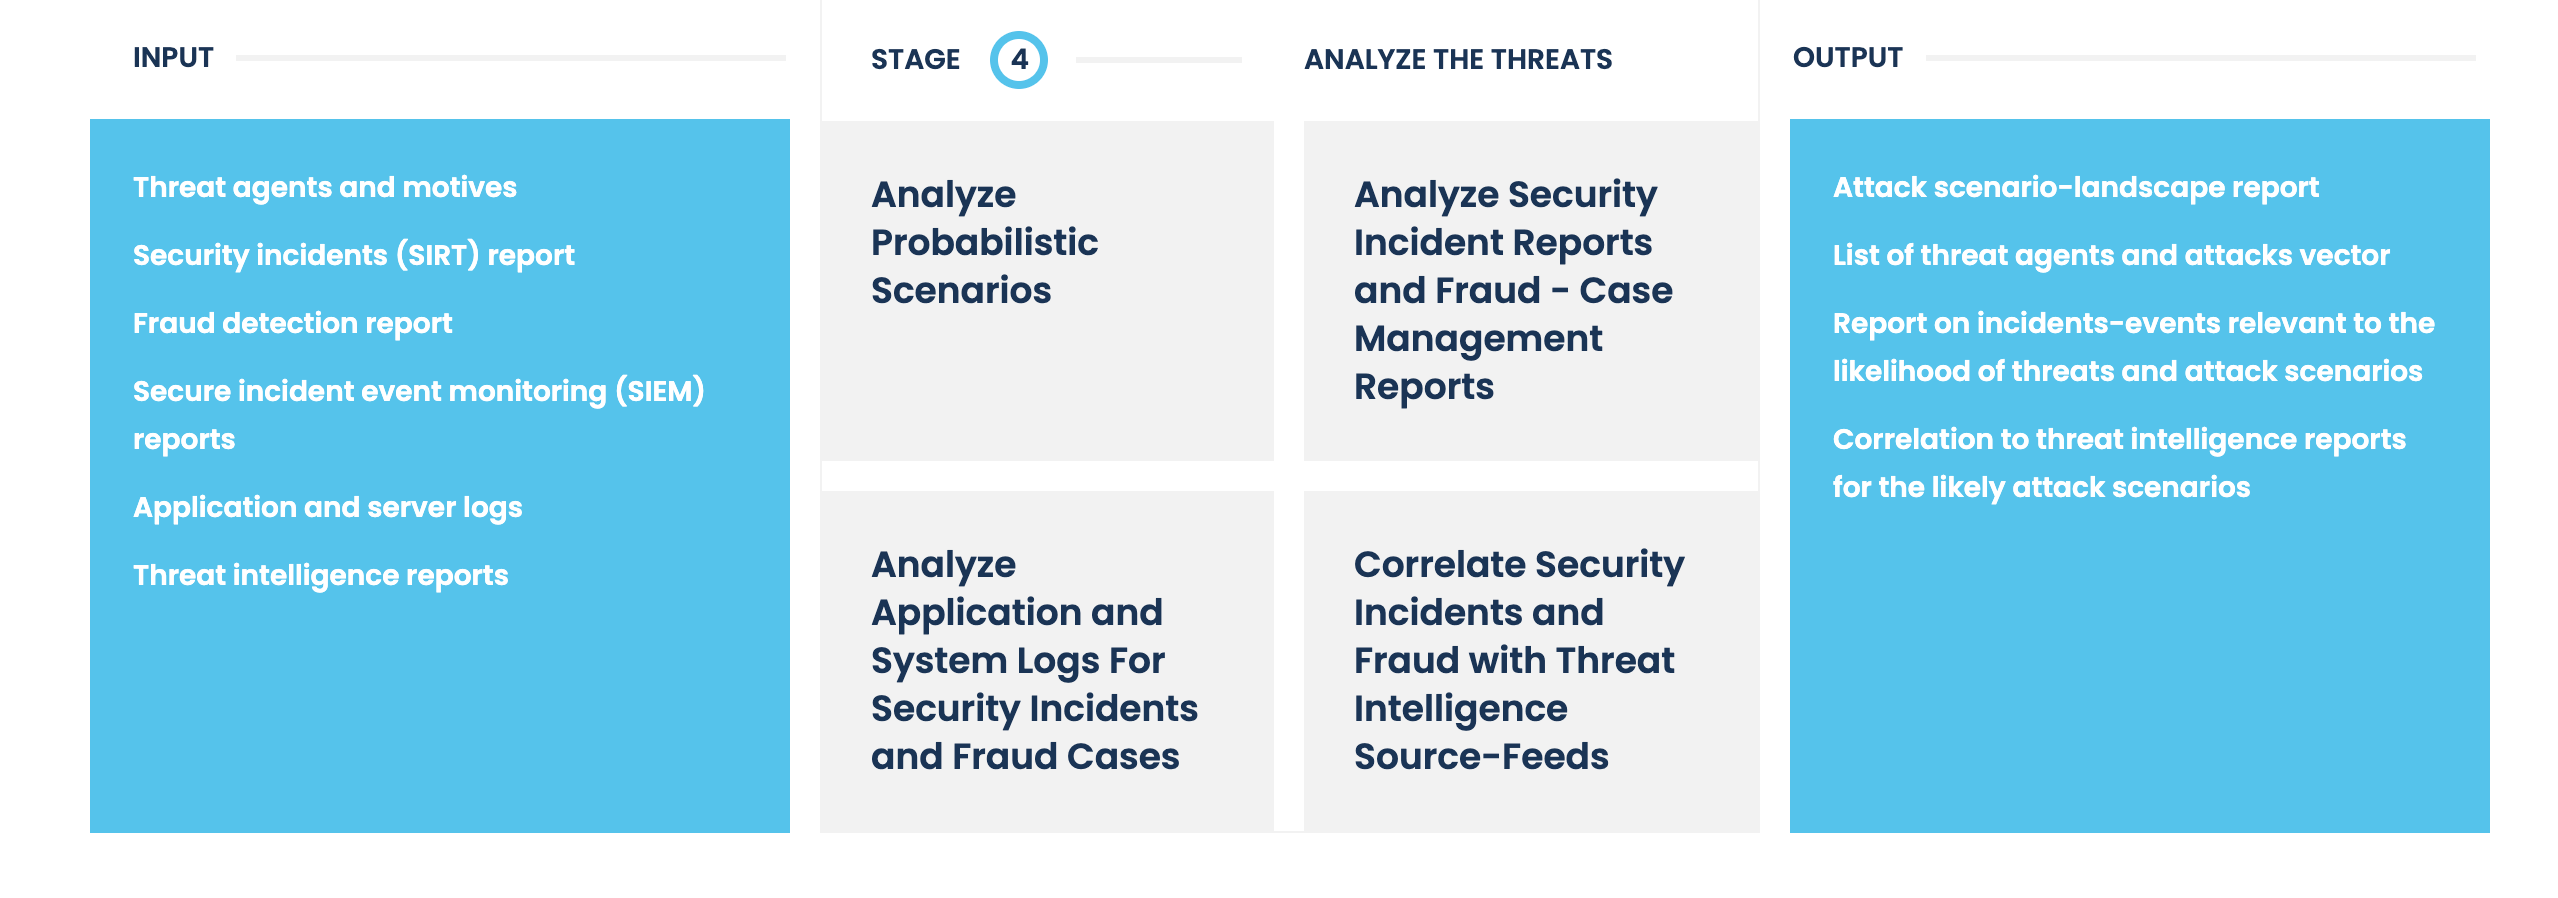 PASTA Threat Model Stage 4 - Analyze threats and prioritize | VerSprite